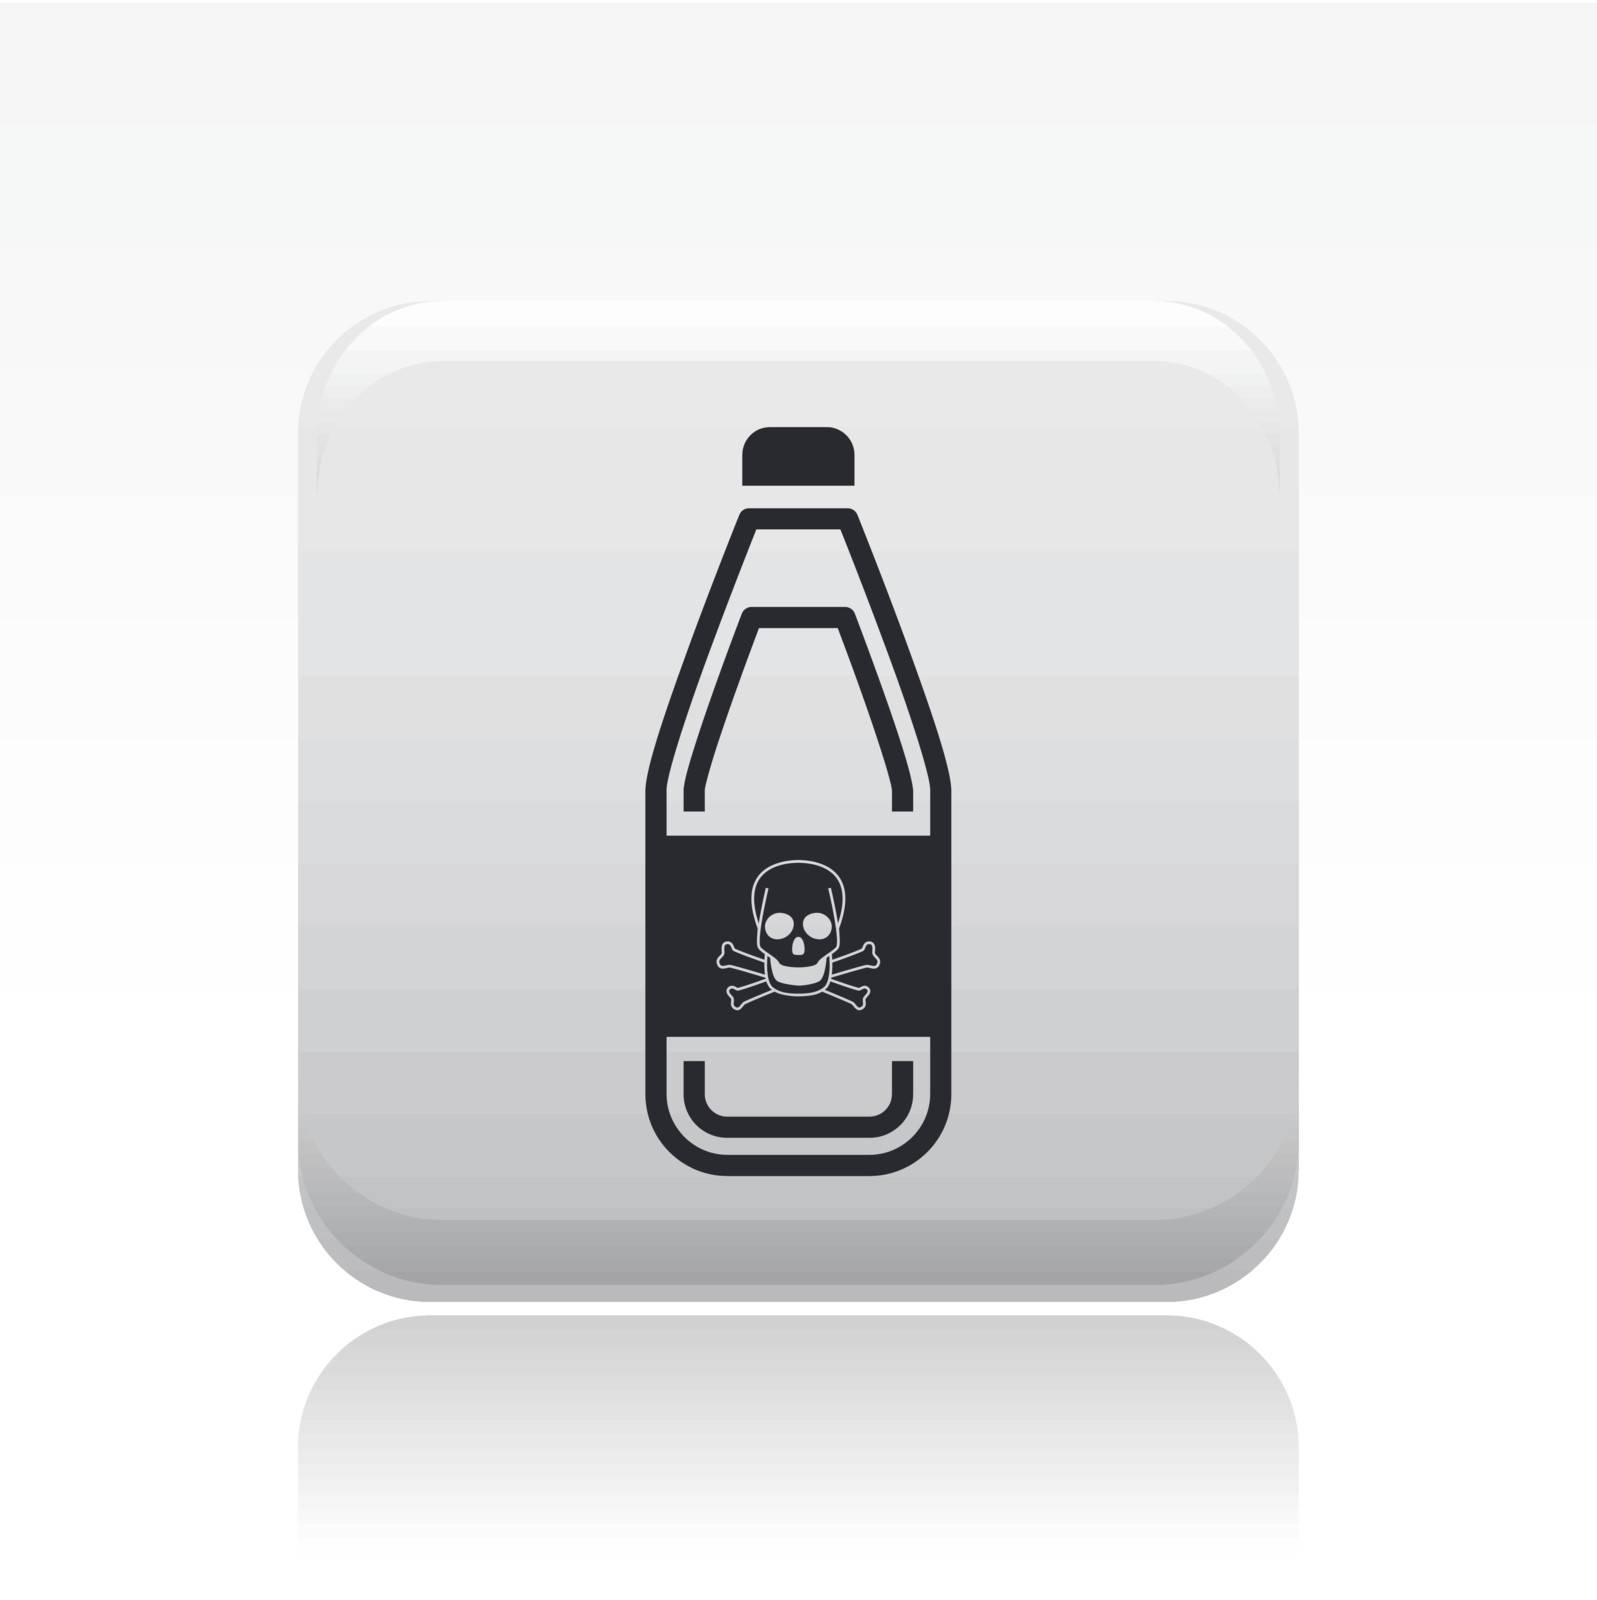 Vector illustration of single isolated danger bottle icon